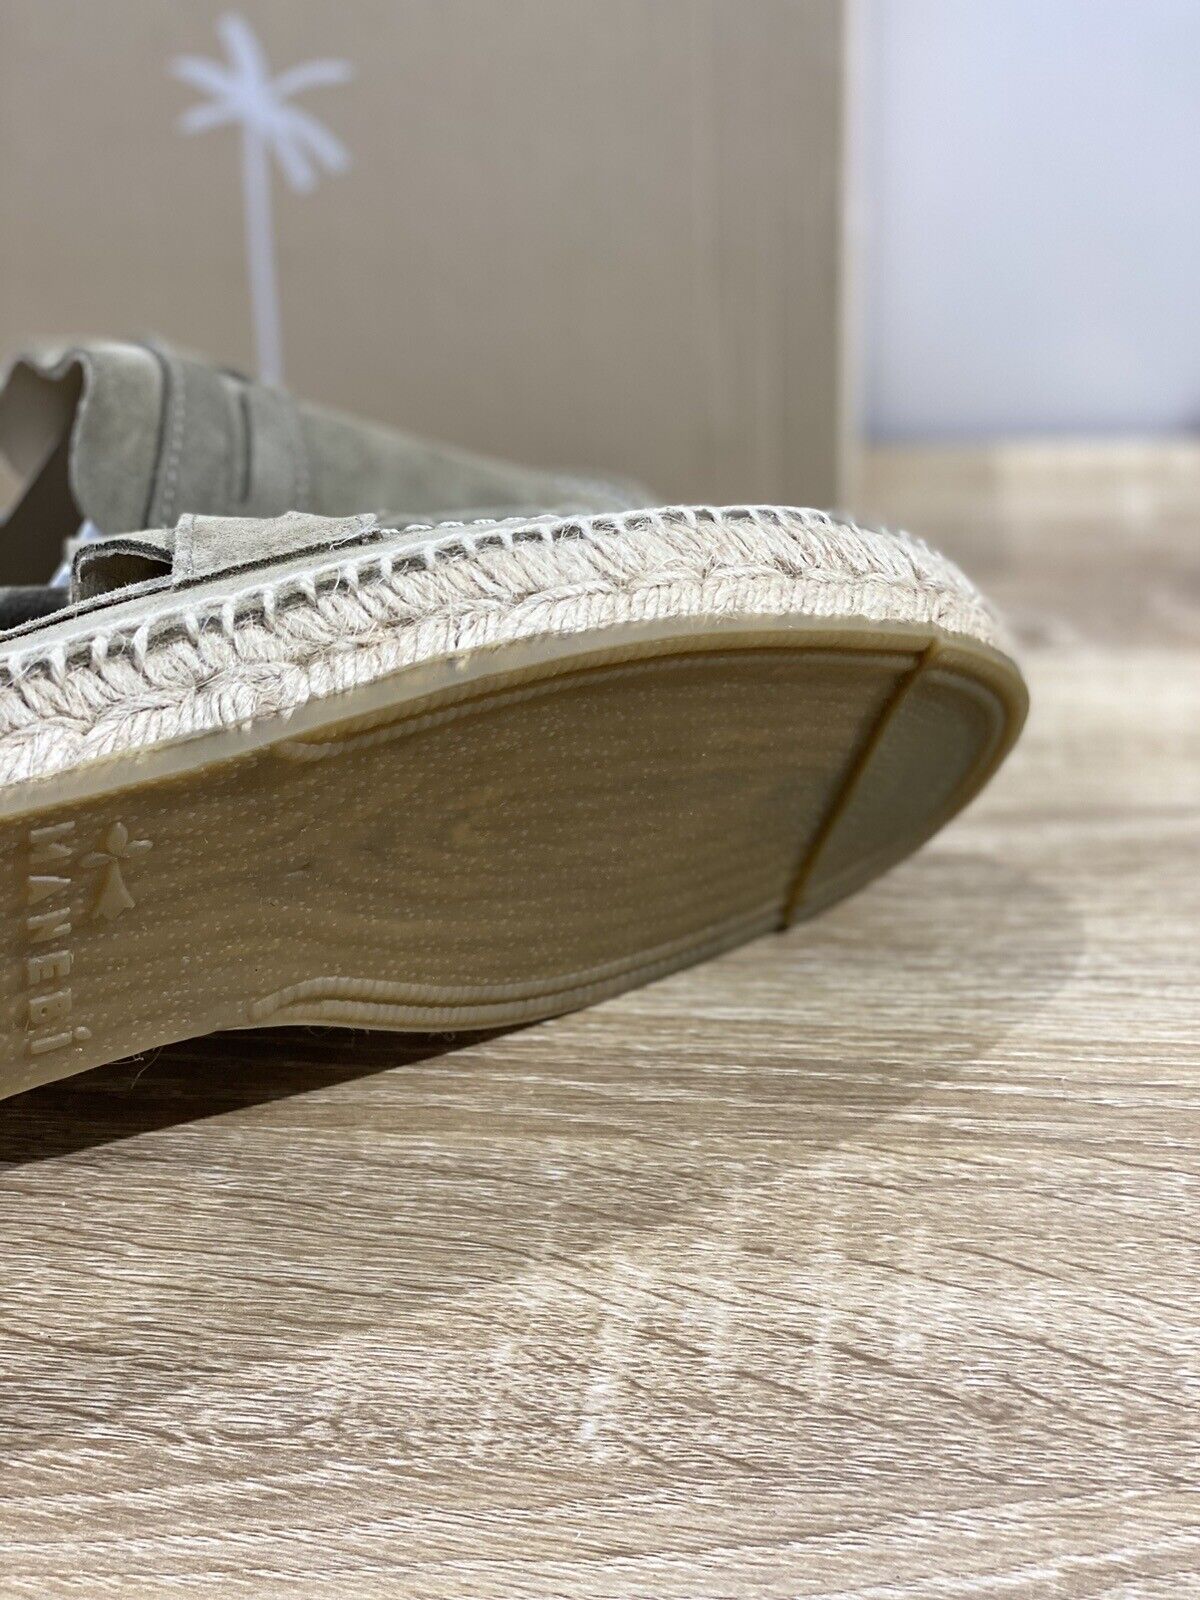 Manebi’ Uomo Espadrilles Mocassino Suede Beige Casual Summer Shoes 40